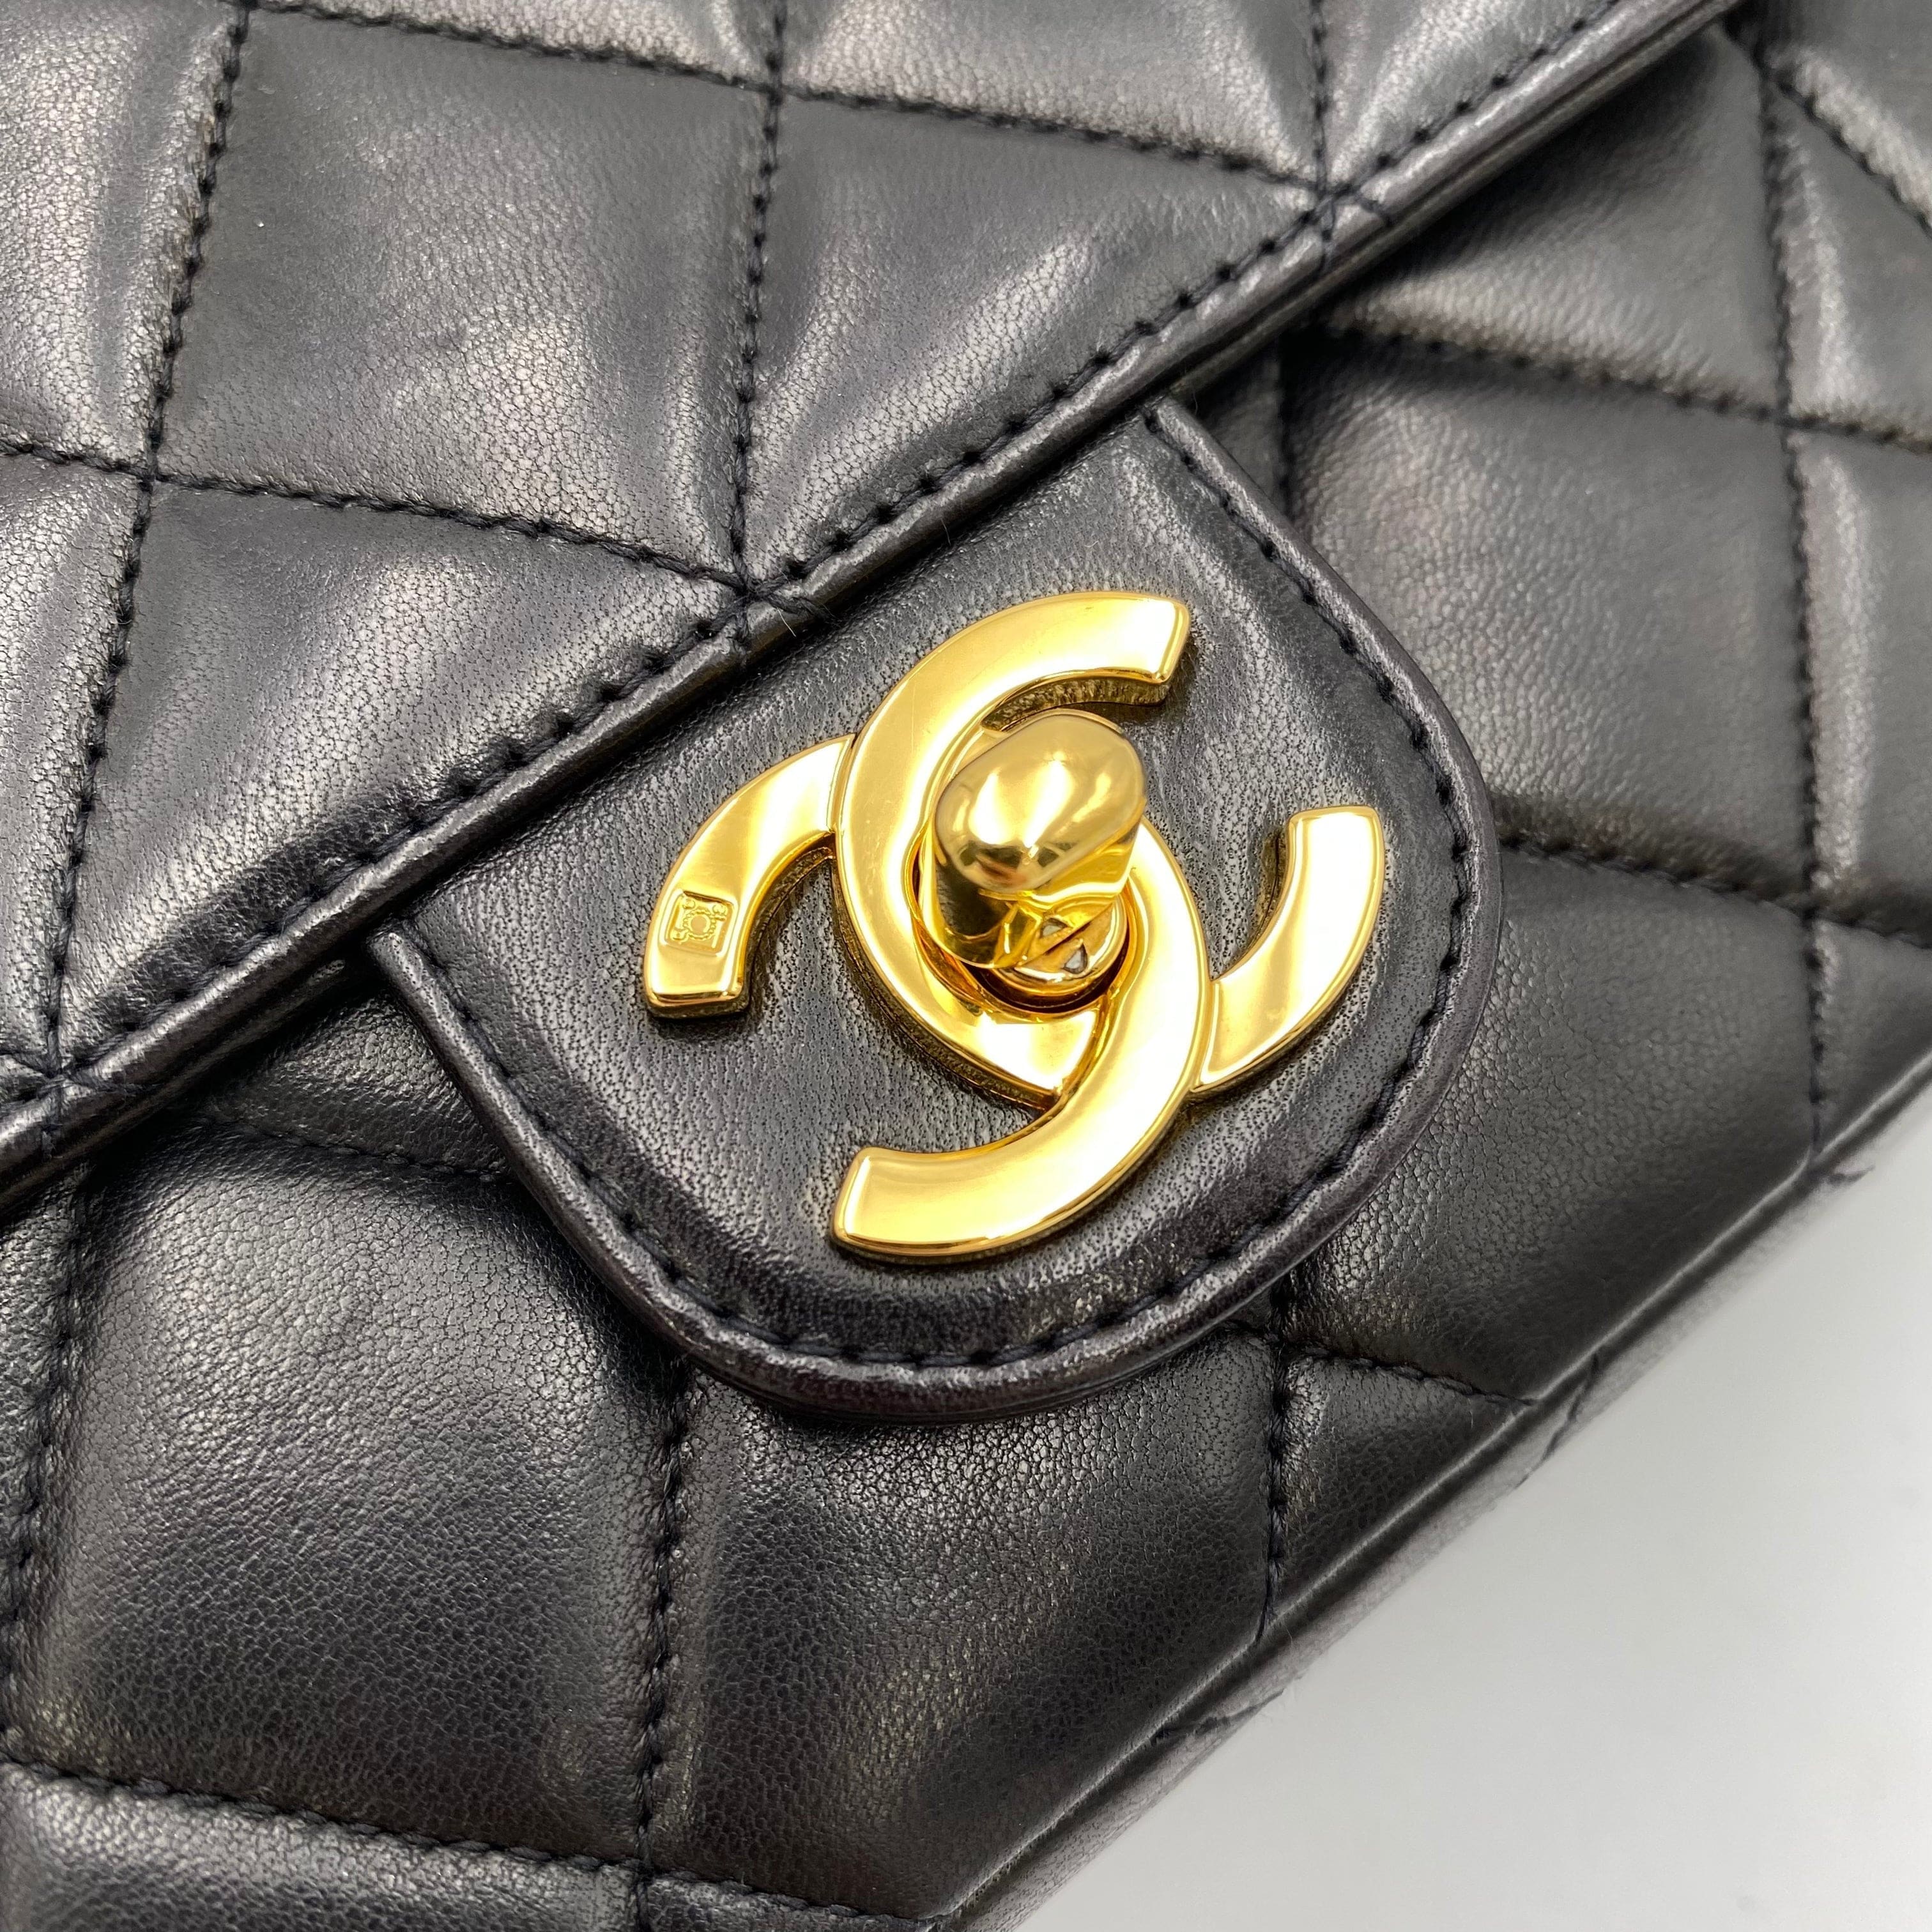 Chanel CHANEL VINTAGE MINI CHAIN HAND BAG BLACK LAMB SKIN